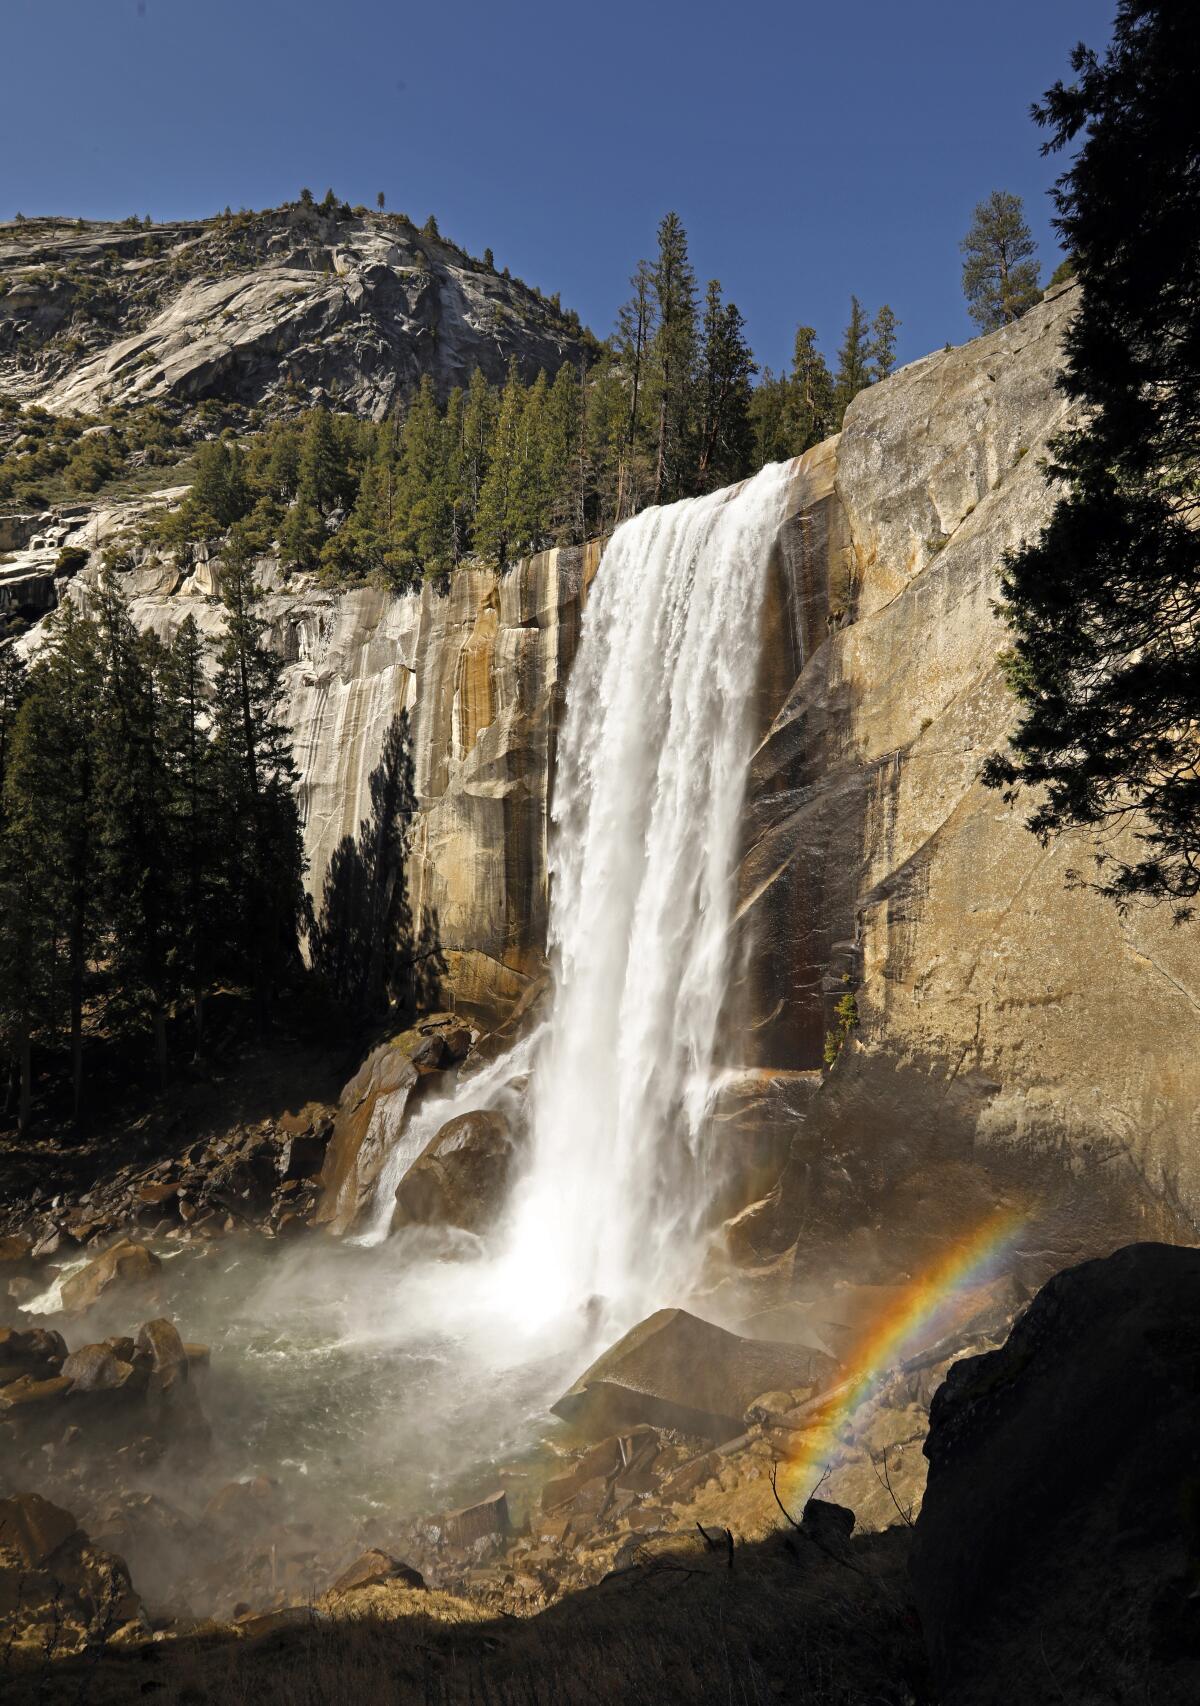 Vernal Falls inside Yosemite National Park on April 18, 2021.